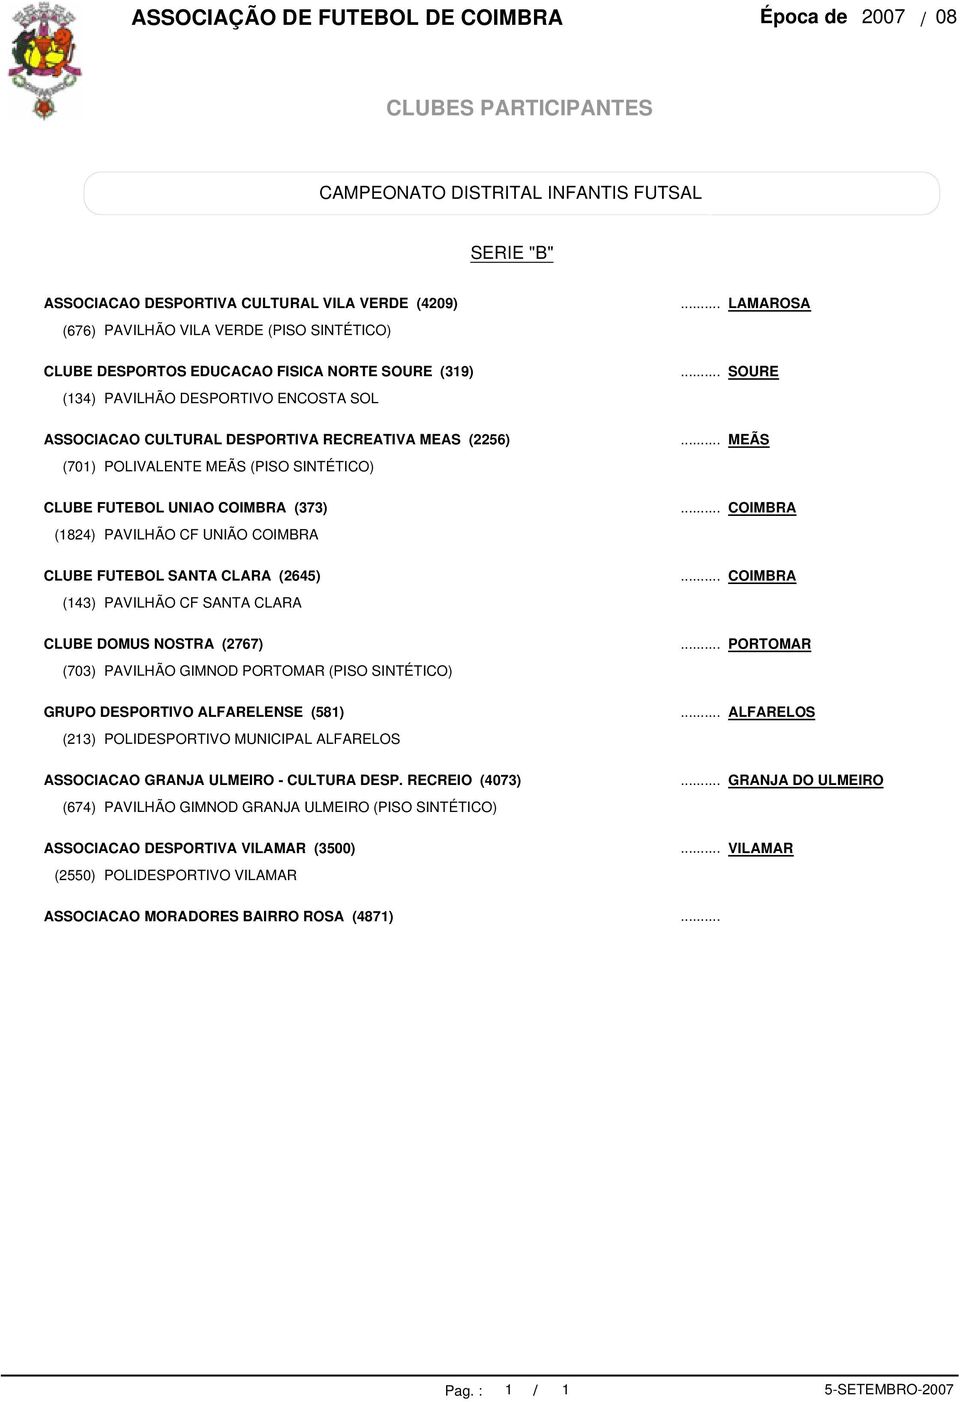 CLARA () (13) PAVILHÃO CF SANTA CLARA COIMBRA CLUBE DOMUS NOSTRA () (703) PAVILHÃO GIMNOD PORTOMAR (PISO SINTÉTICO) PORTOMAR GRUPO DESPORTIVO ALFARELENSE (581) (213) POLIDESPORTIVO MUNICIPAL